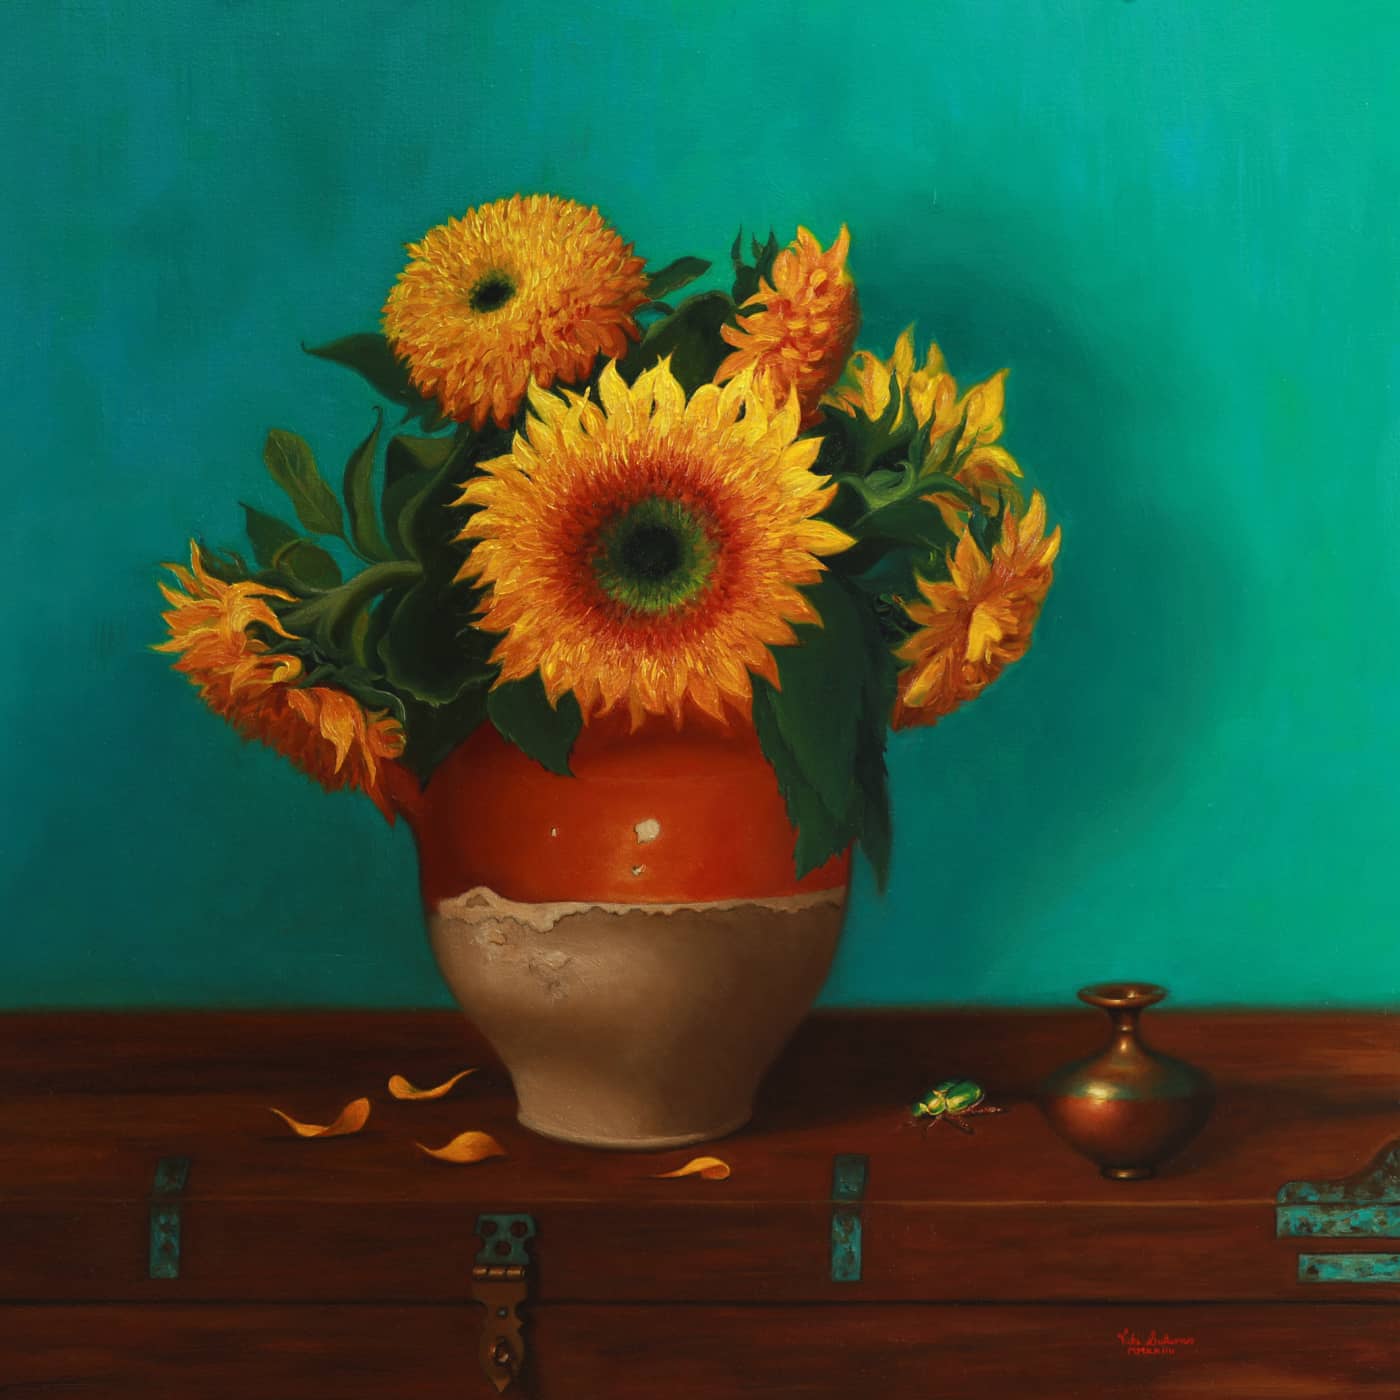 Vicki Sullivan Painting ~ 'Sunflowers with Christmas Beetle' - Curate Art & Design Gallery Sorrento, Mornington Peninsula, Melbourne